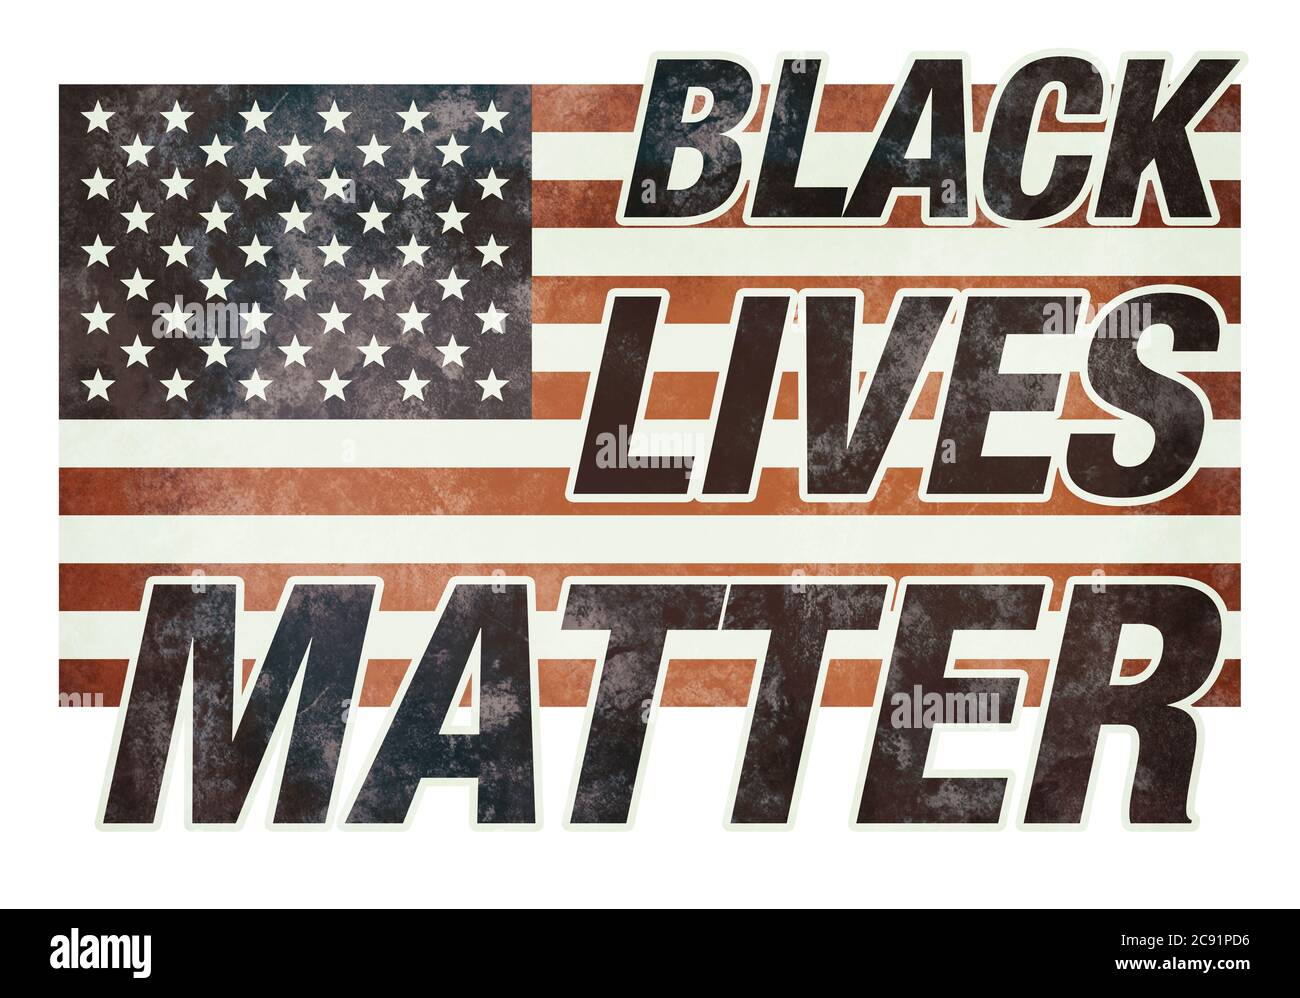 BLACK LIVES MATTER on American national flag illustration Stock Photo